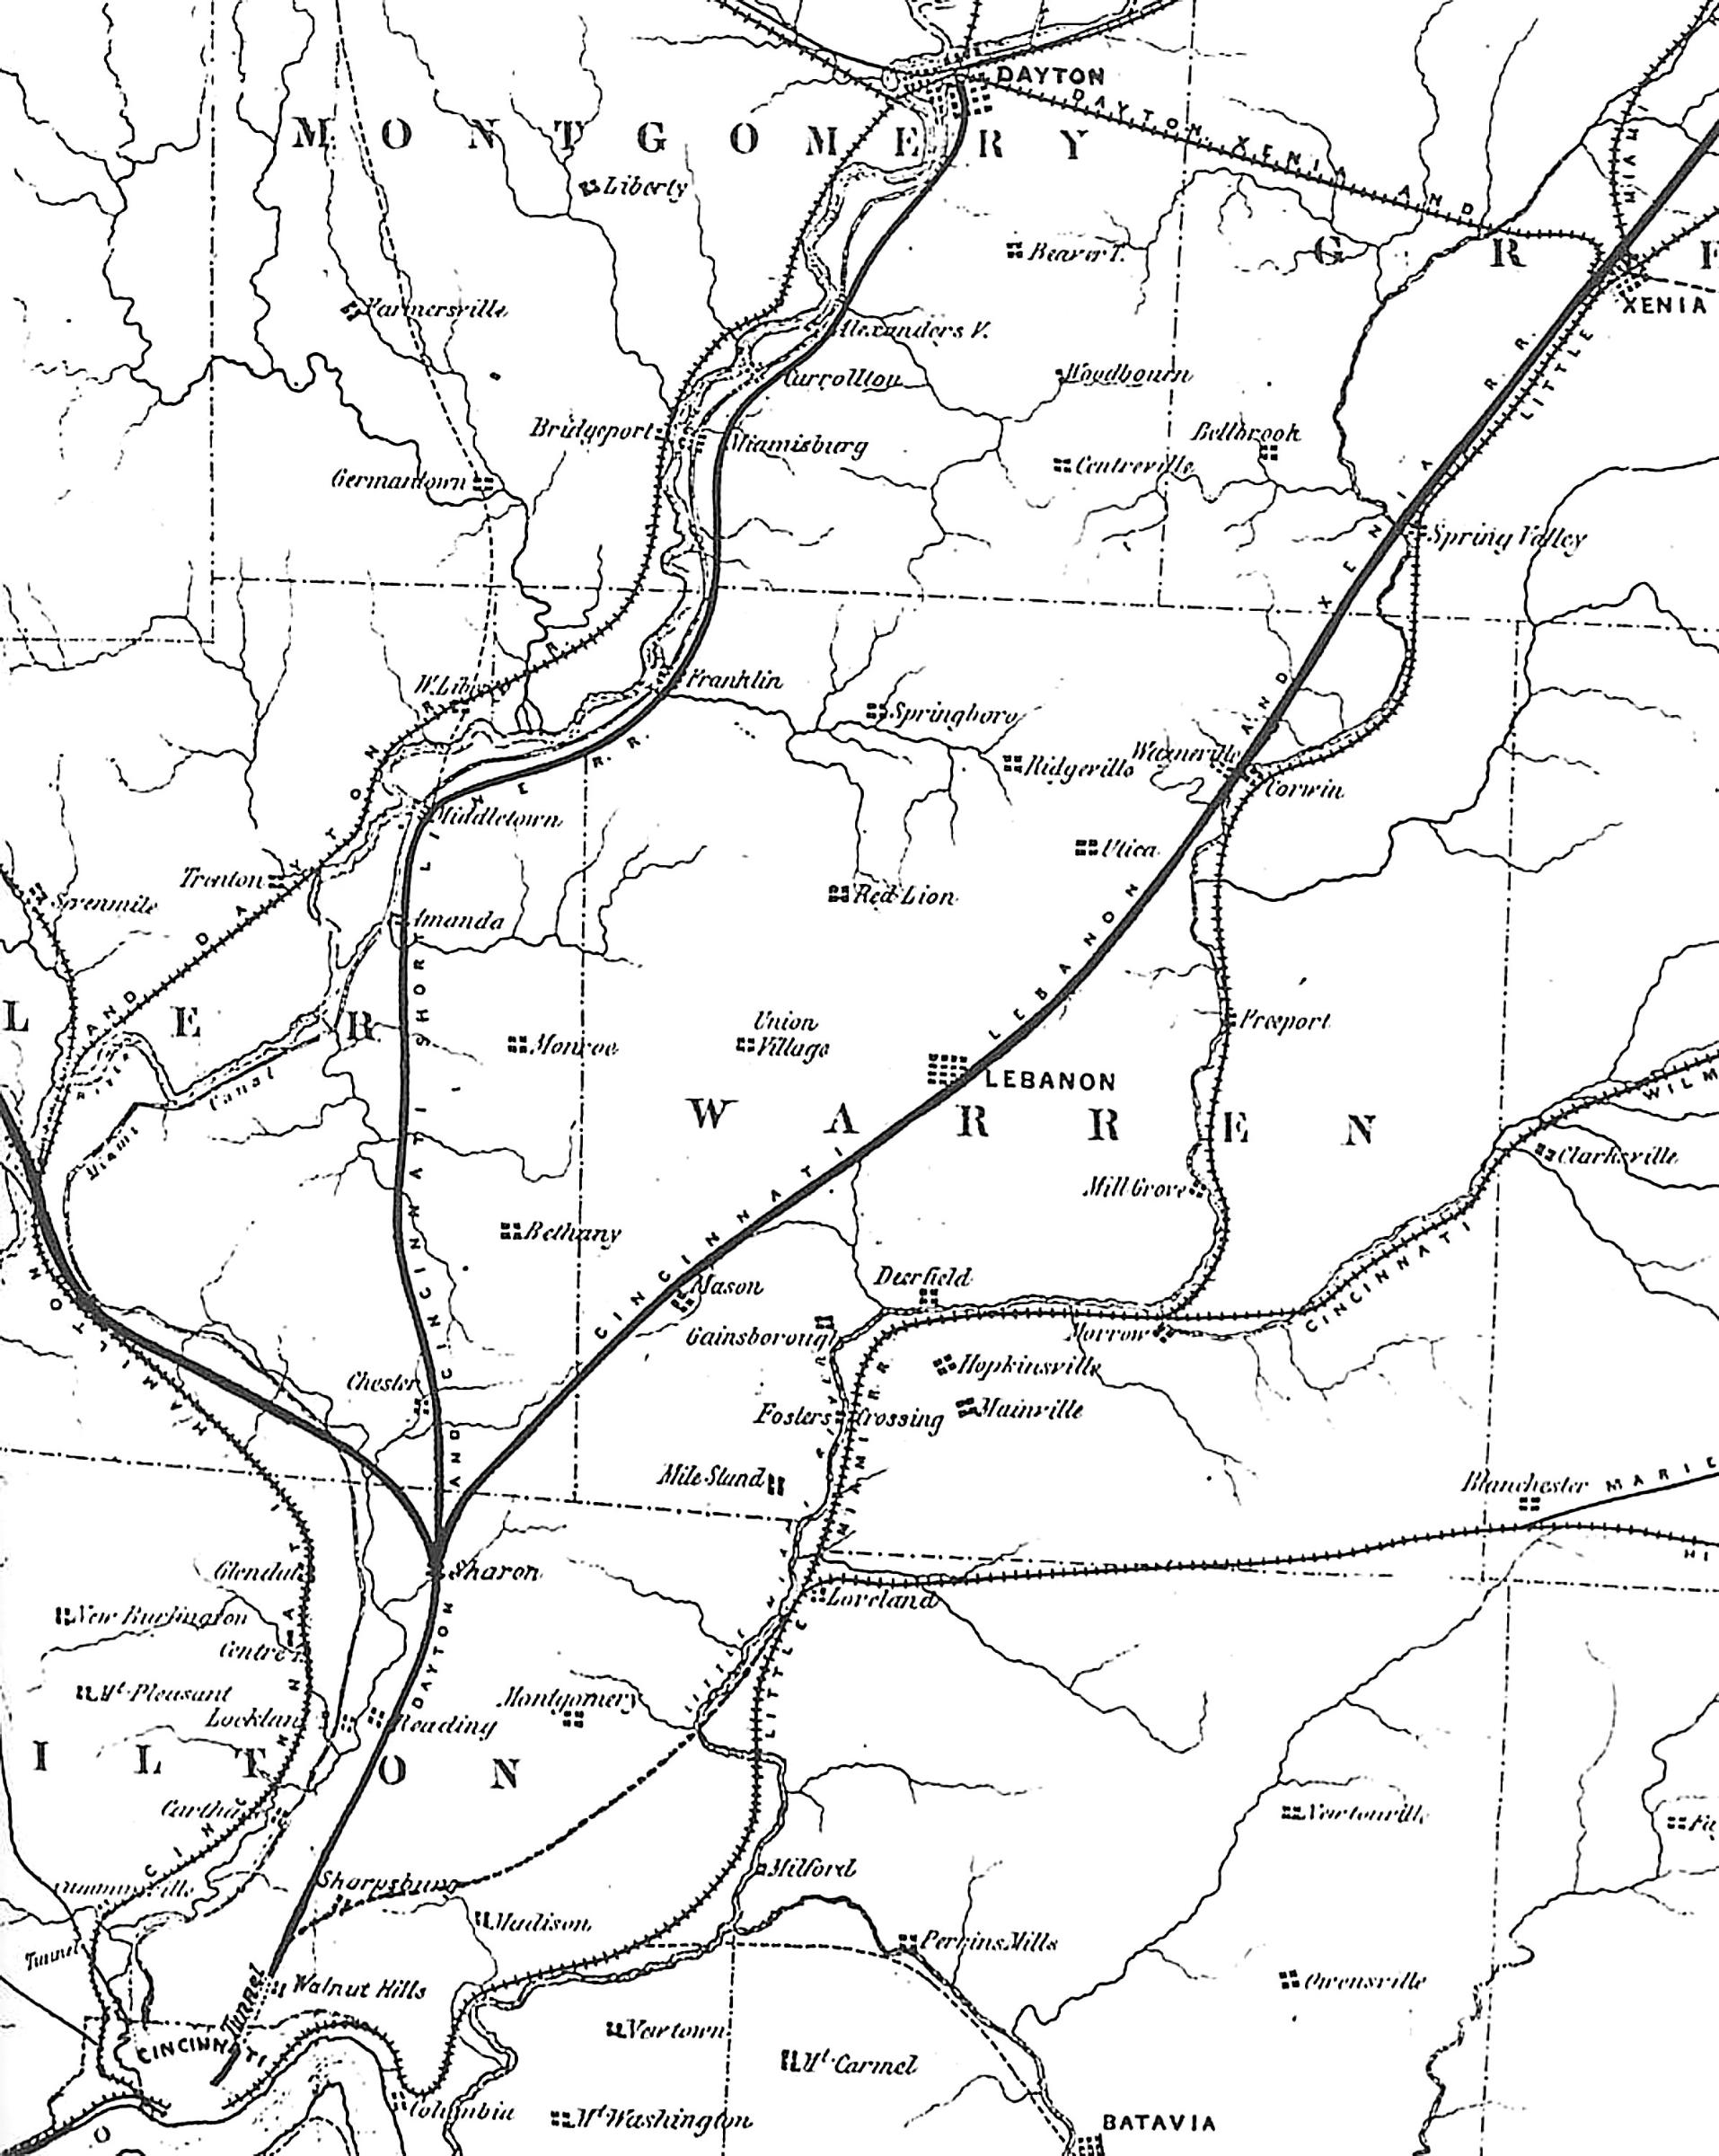 0001_1854_Dayton_and_Cincinnati_Railroad_map